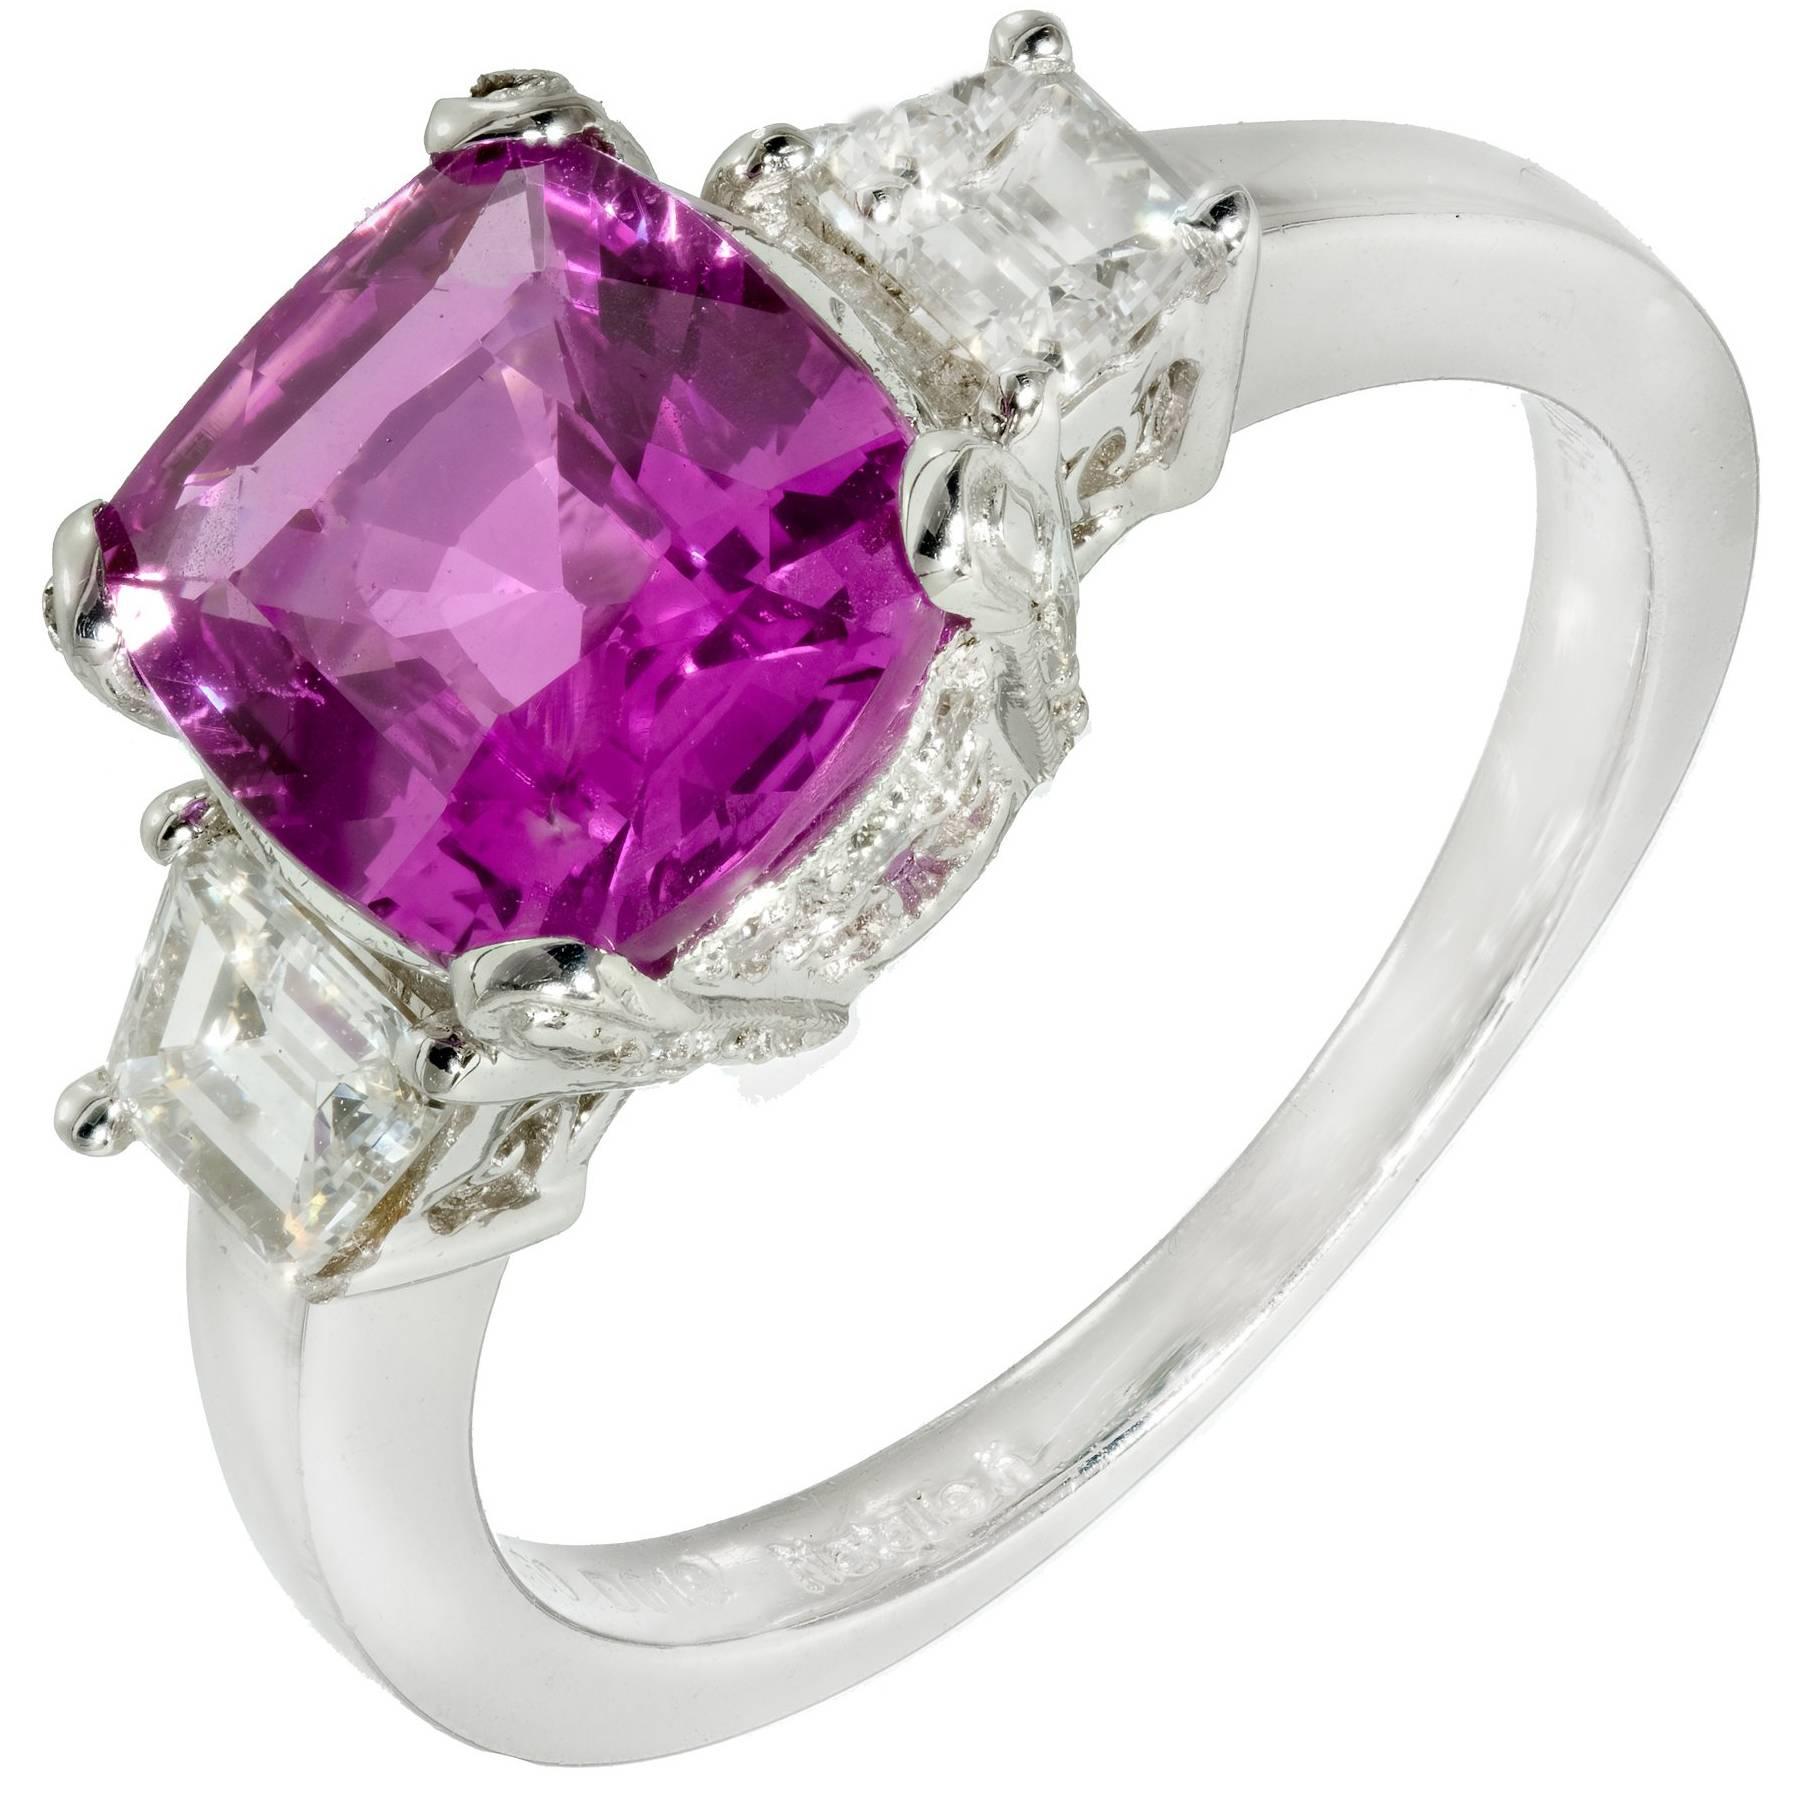 Peter Suchy GIA Certified 2.76 Carat Purple Pink Sapphire Diamond Ring